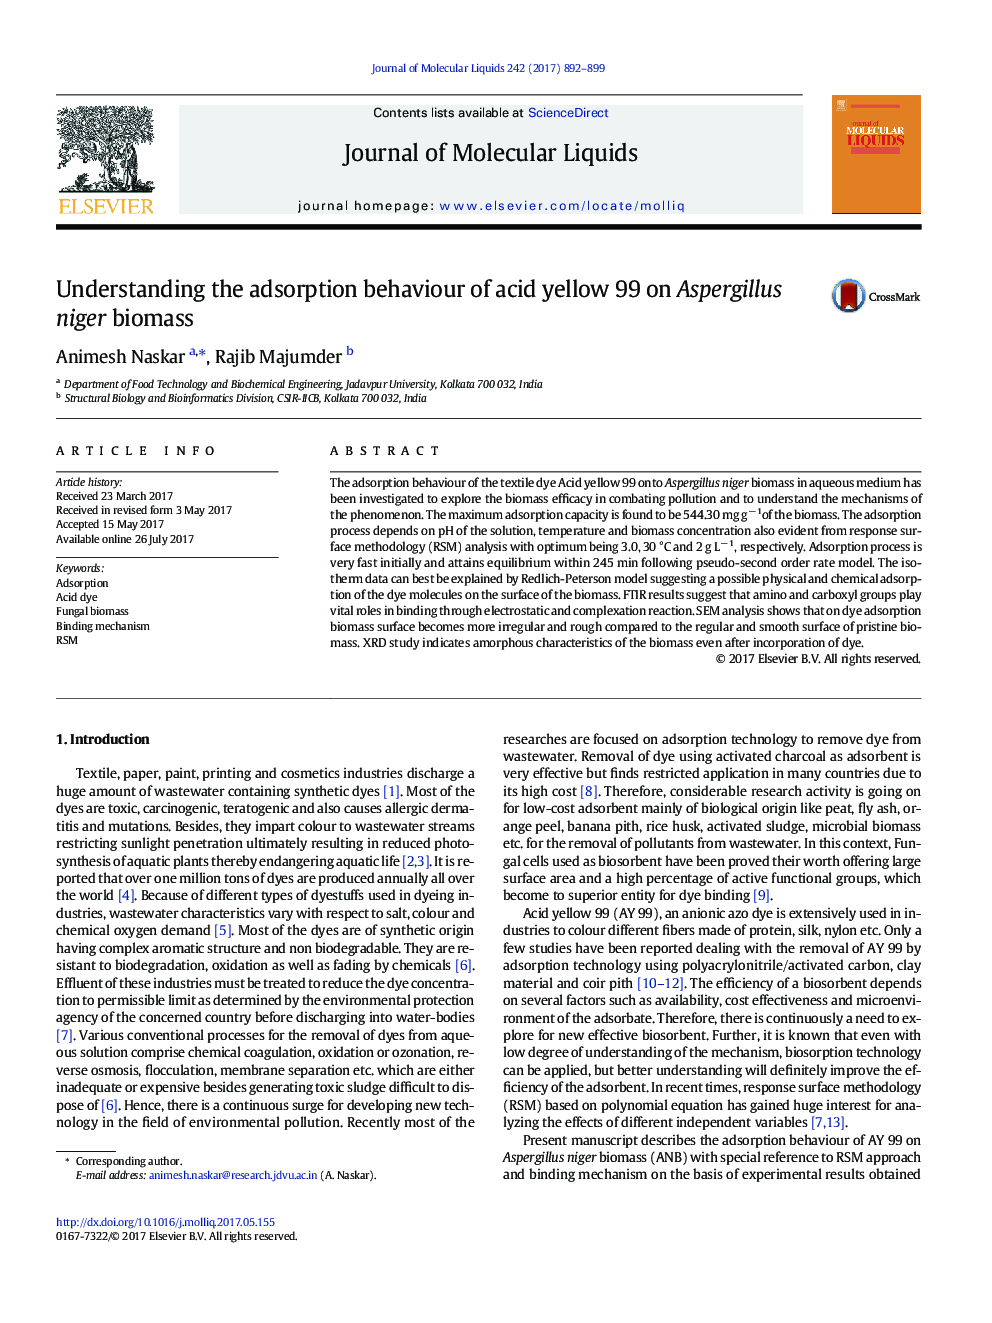 Understanding the adsorption behaviour of acid yellow 99 on Aspergillus niger biomass